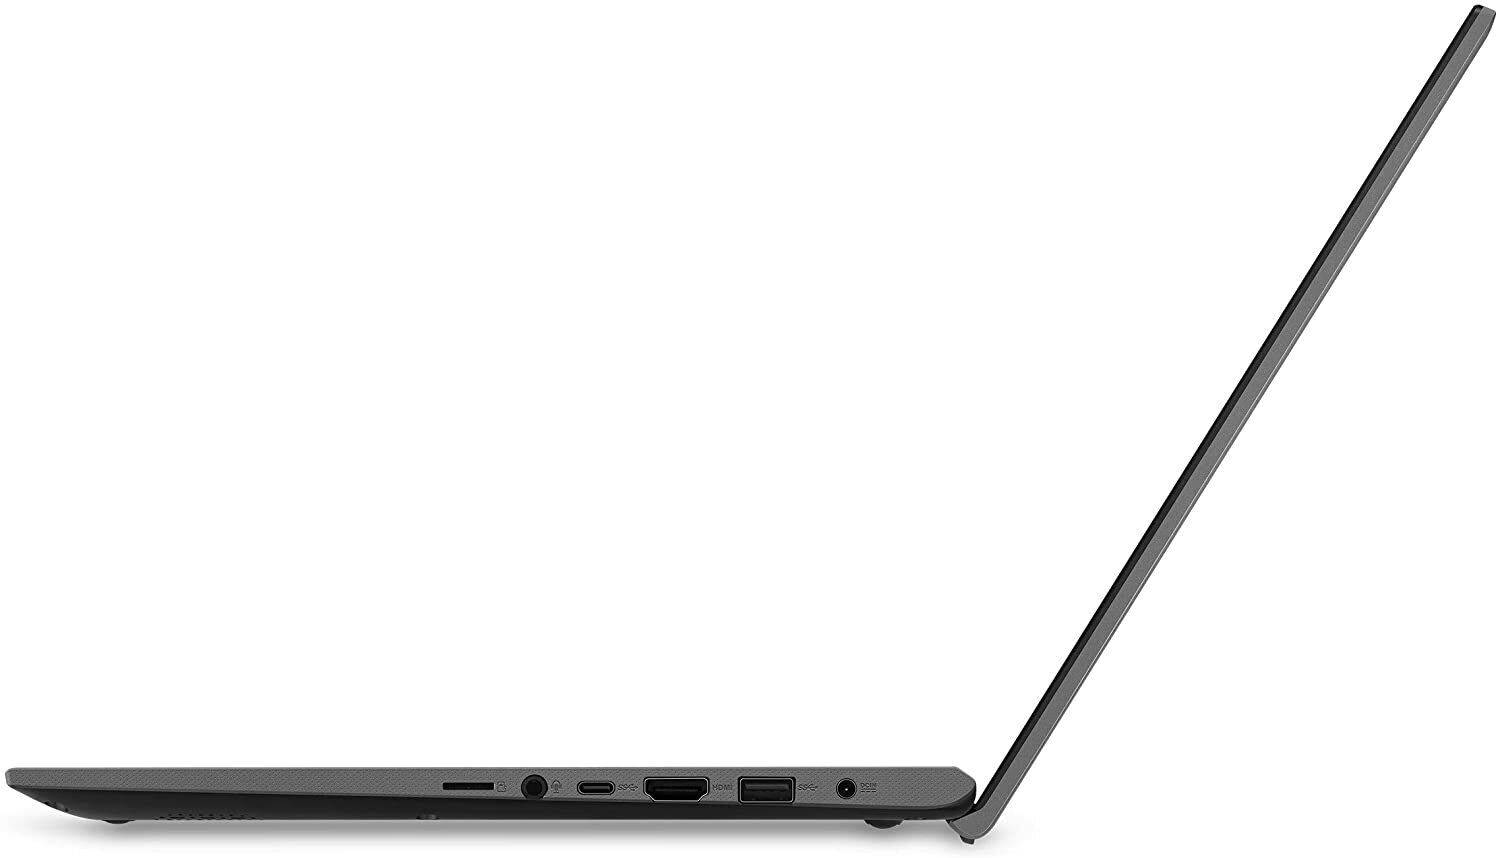 ASUS VivoBook 15 Thin and Light Laptop, 15.6” FHD, Intel i5-1035G1